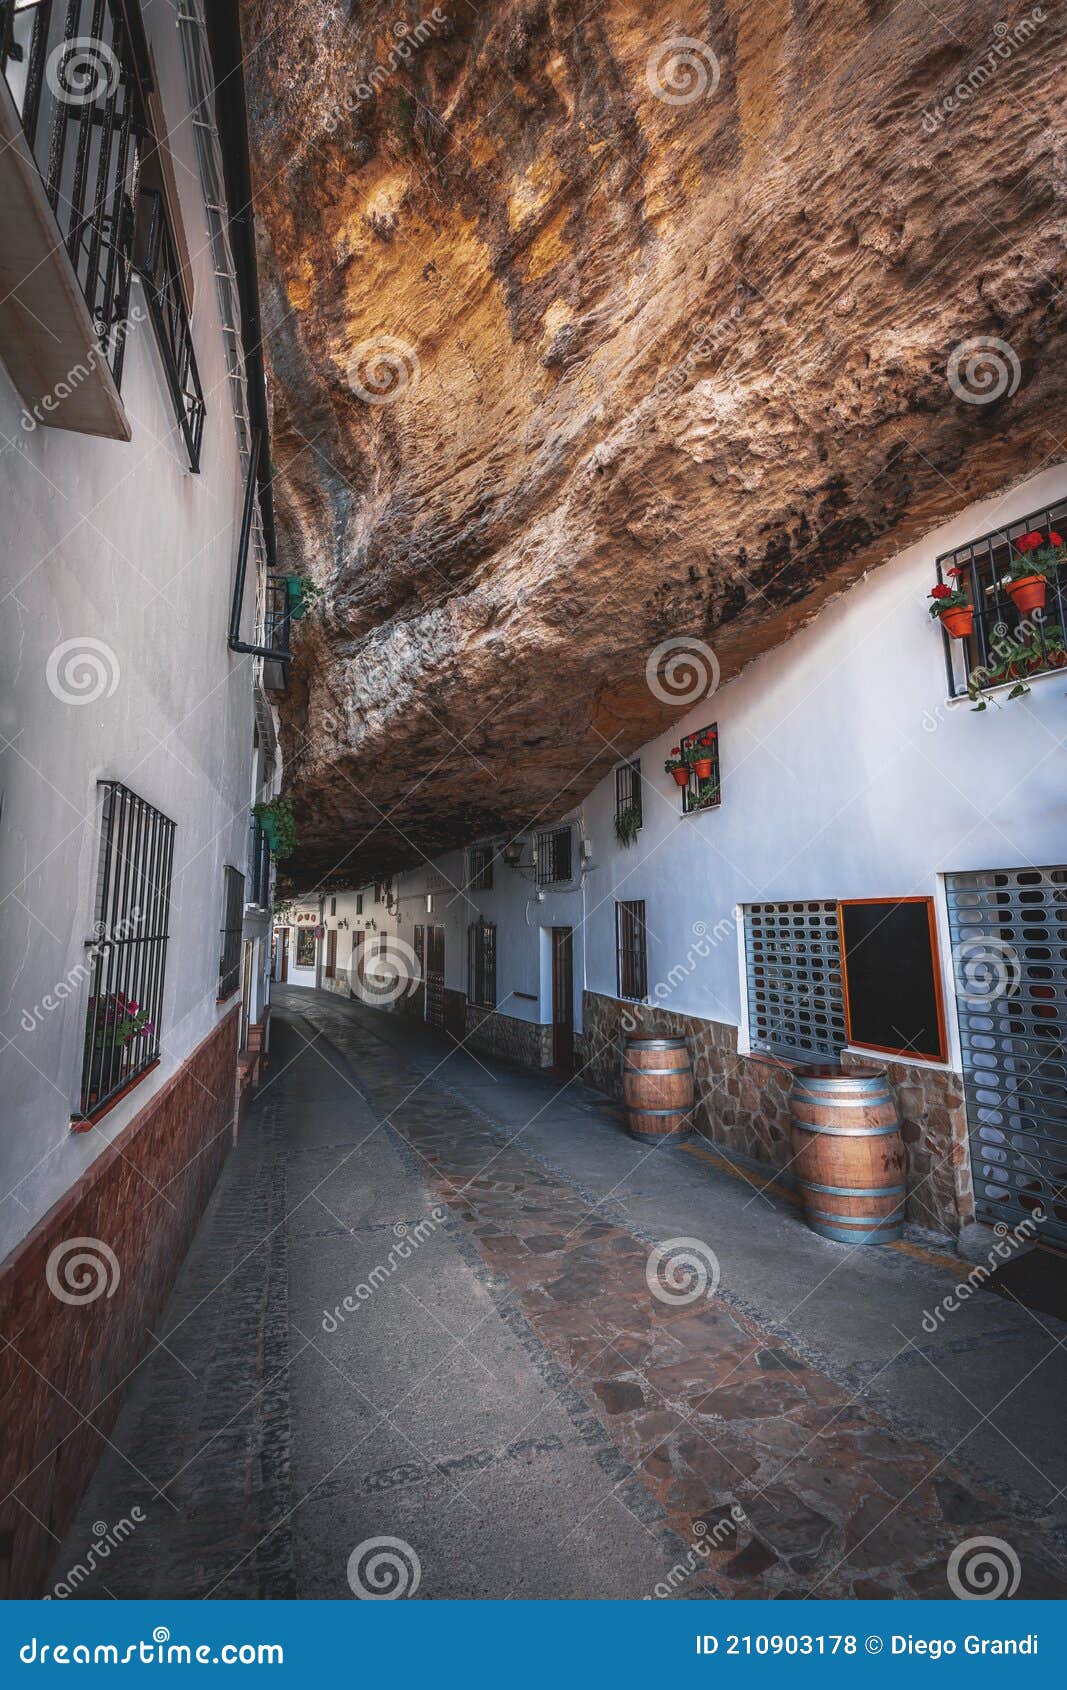 houses built into rocks at cuevas de la sombra street - setenil de las bodegas, cadiz province, andalusia, spain